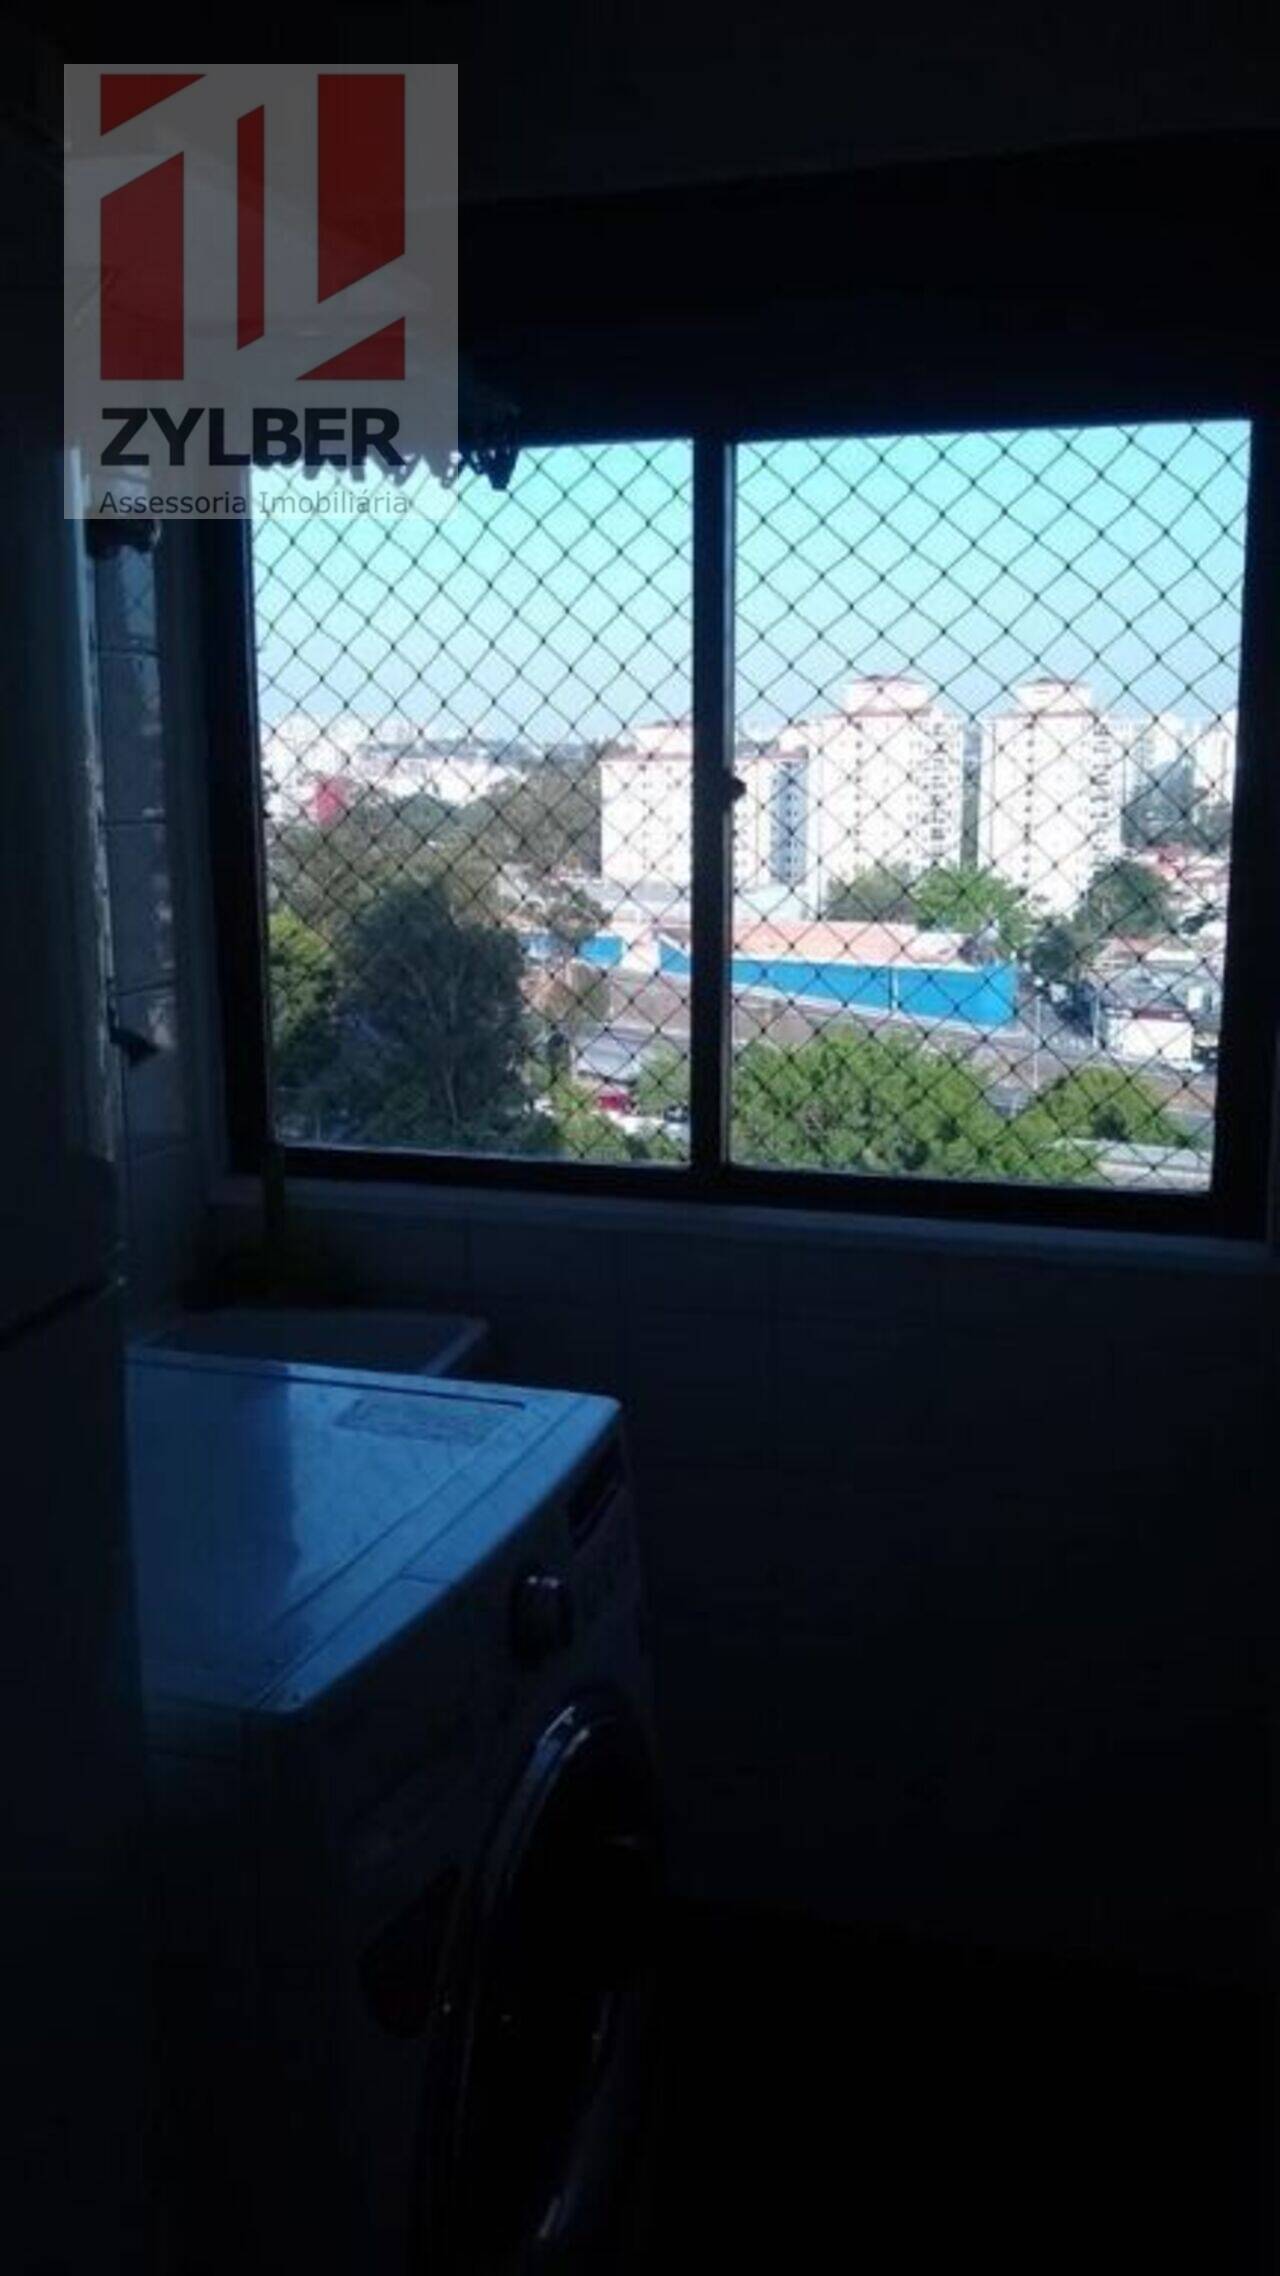 Apartamento Jardim Bonfiglioli, São Paulo - SP